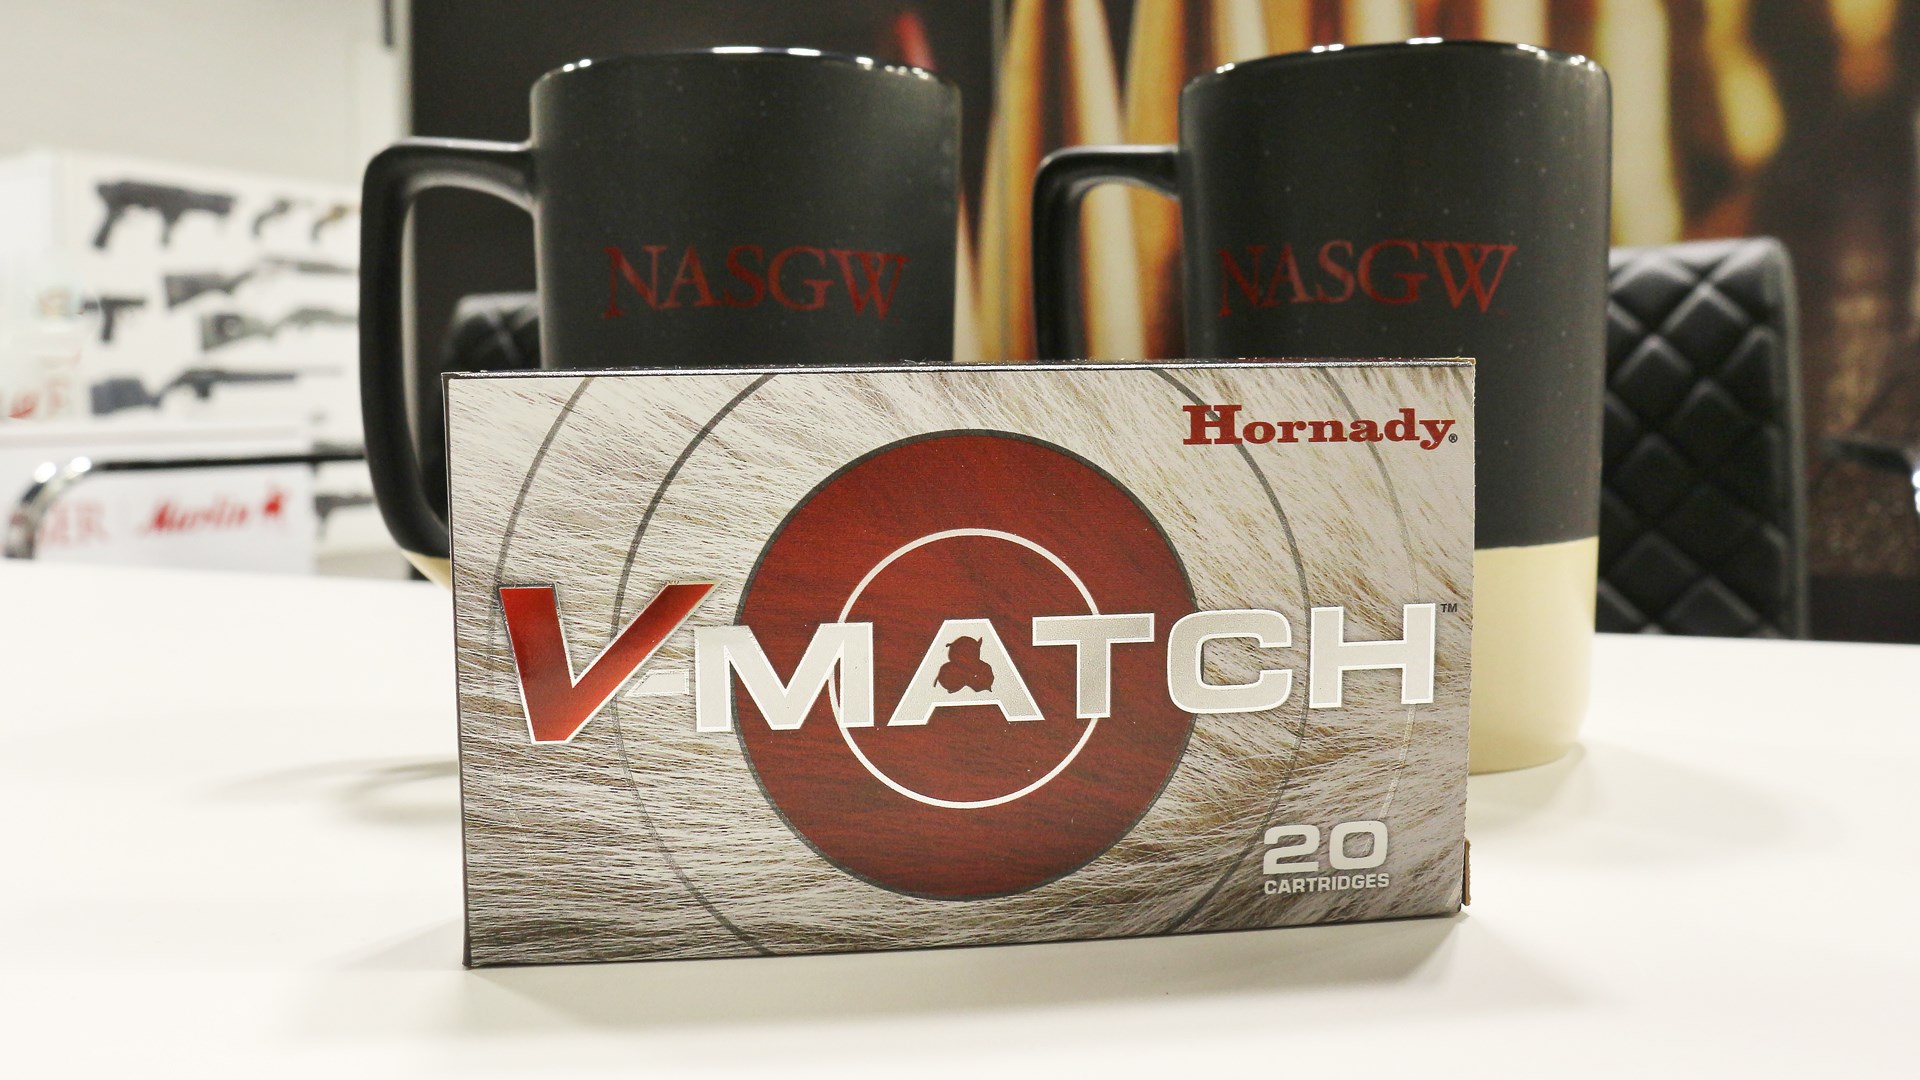 Hornady V-Match box of ammunition red circle bullseye ammo carton NASGW mugs background